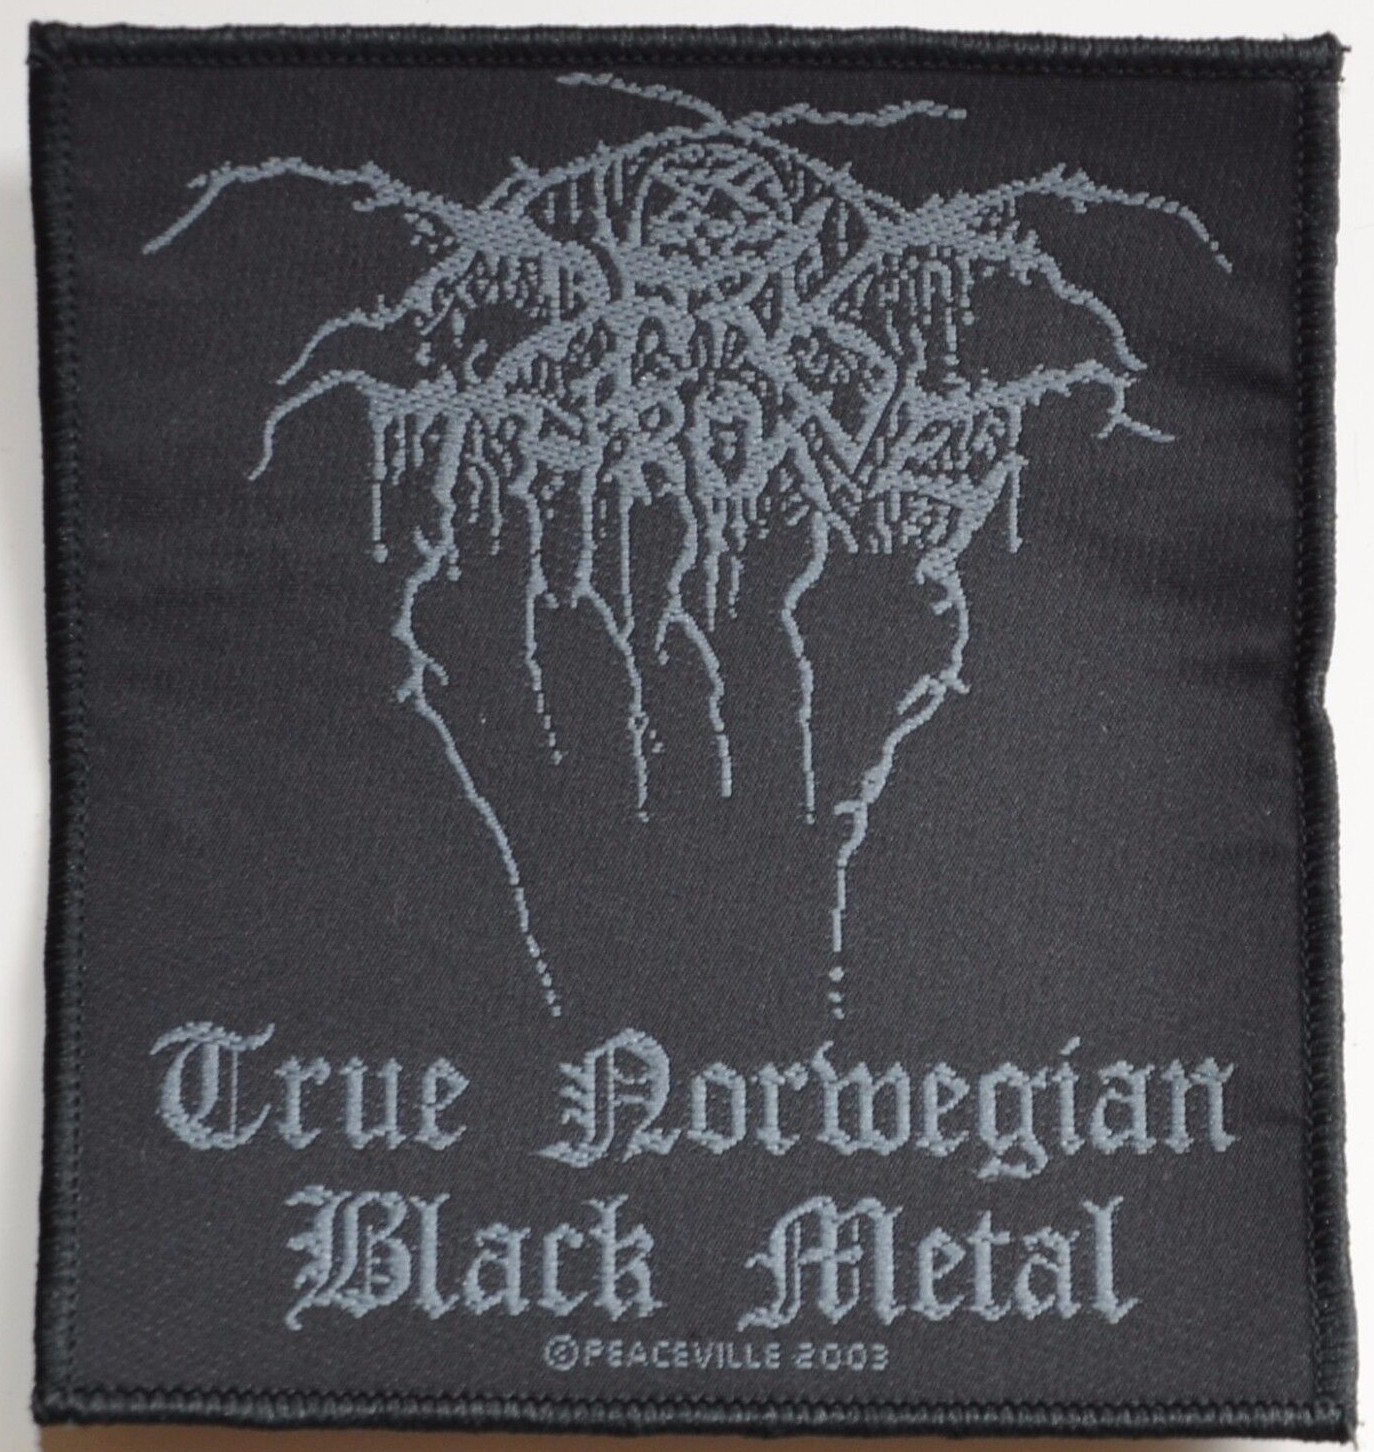 Darkthrone - True Norwegian Black Metal